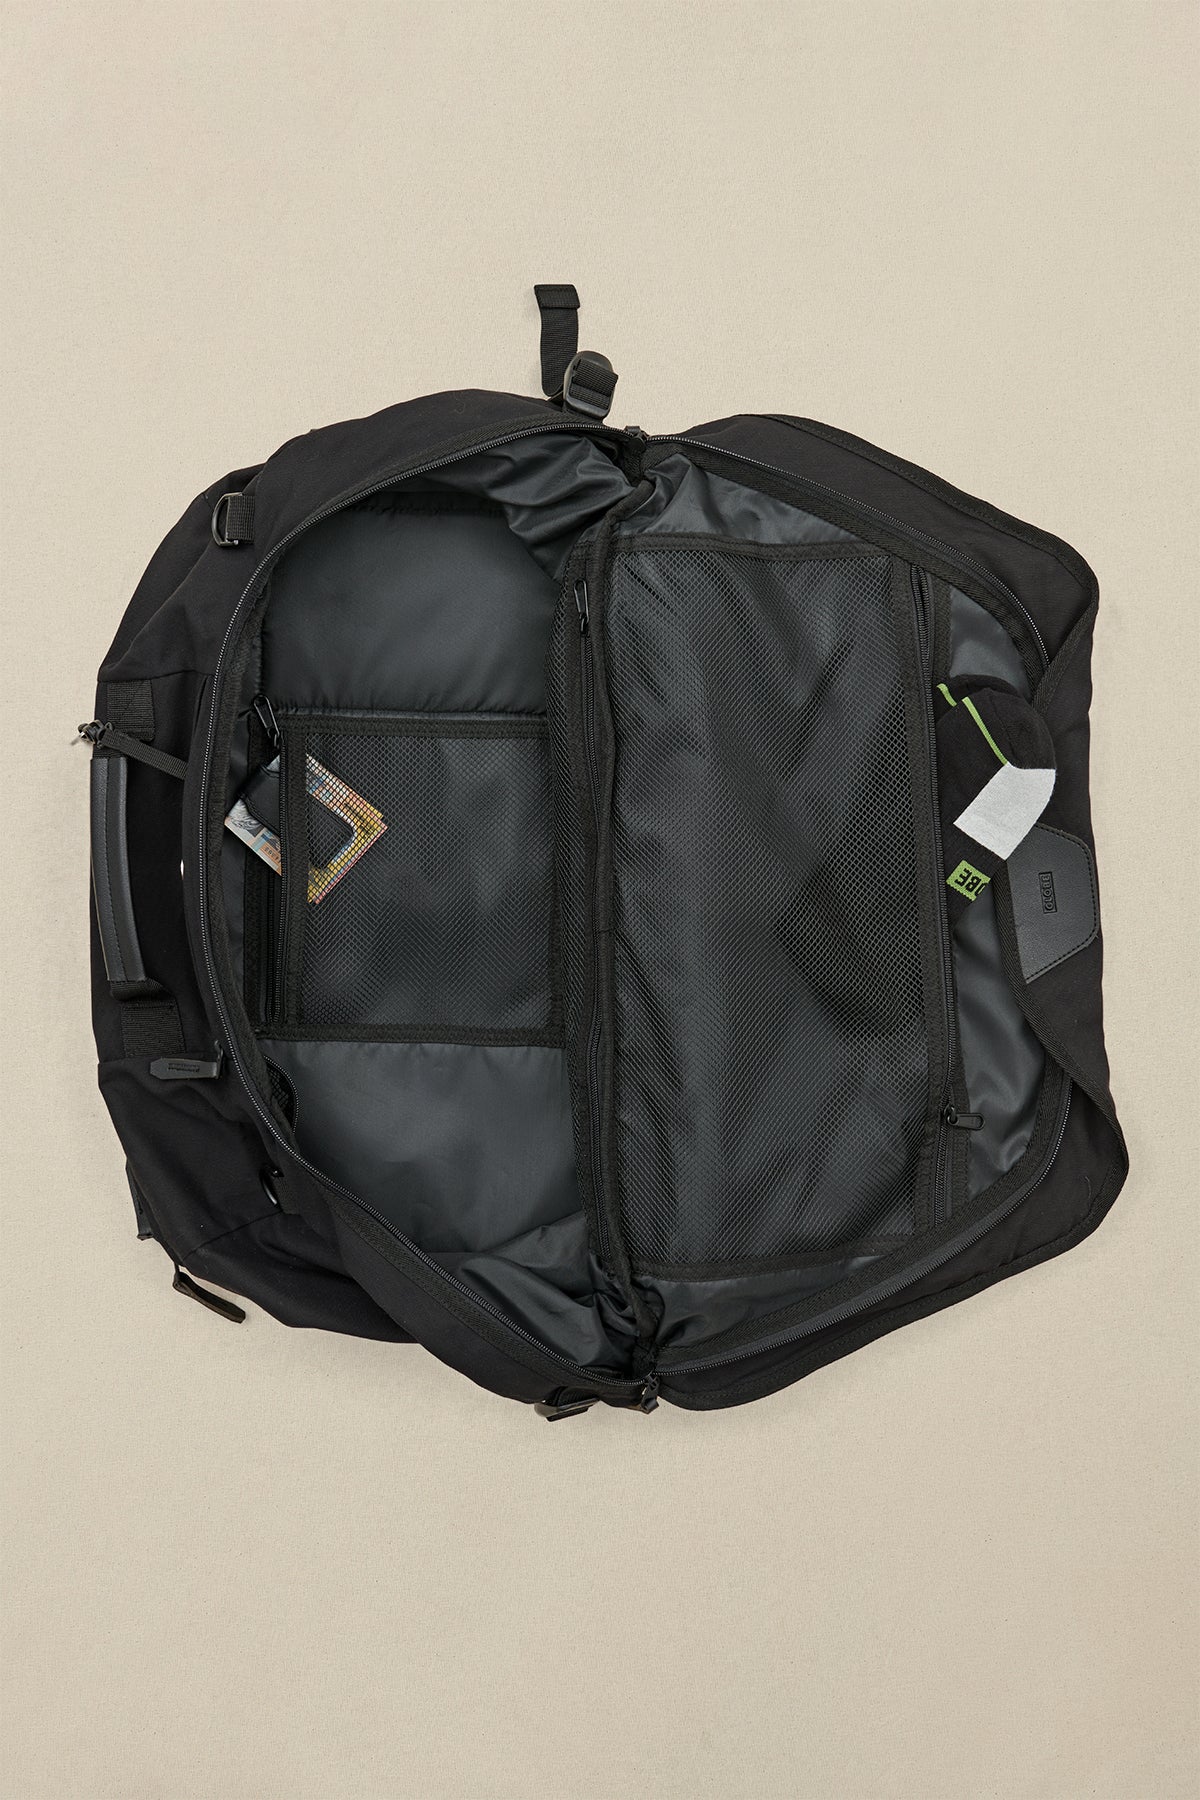 top view of Globe Black 3 in 1 traveler bag